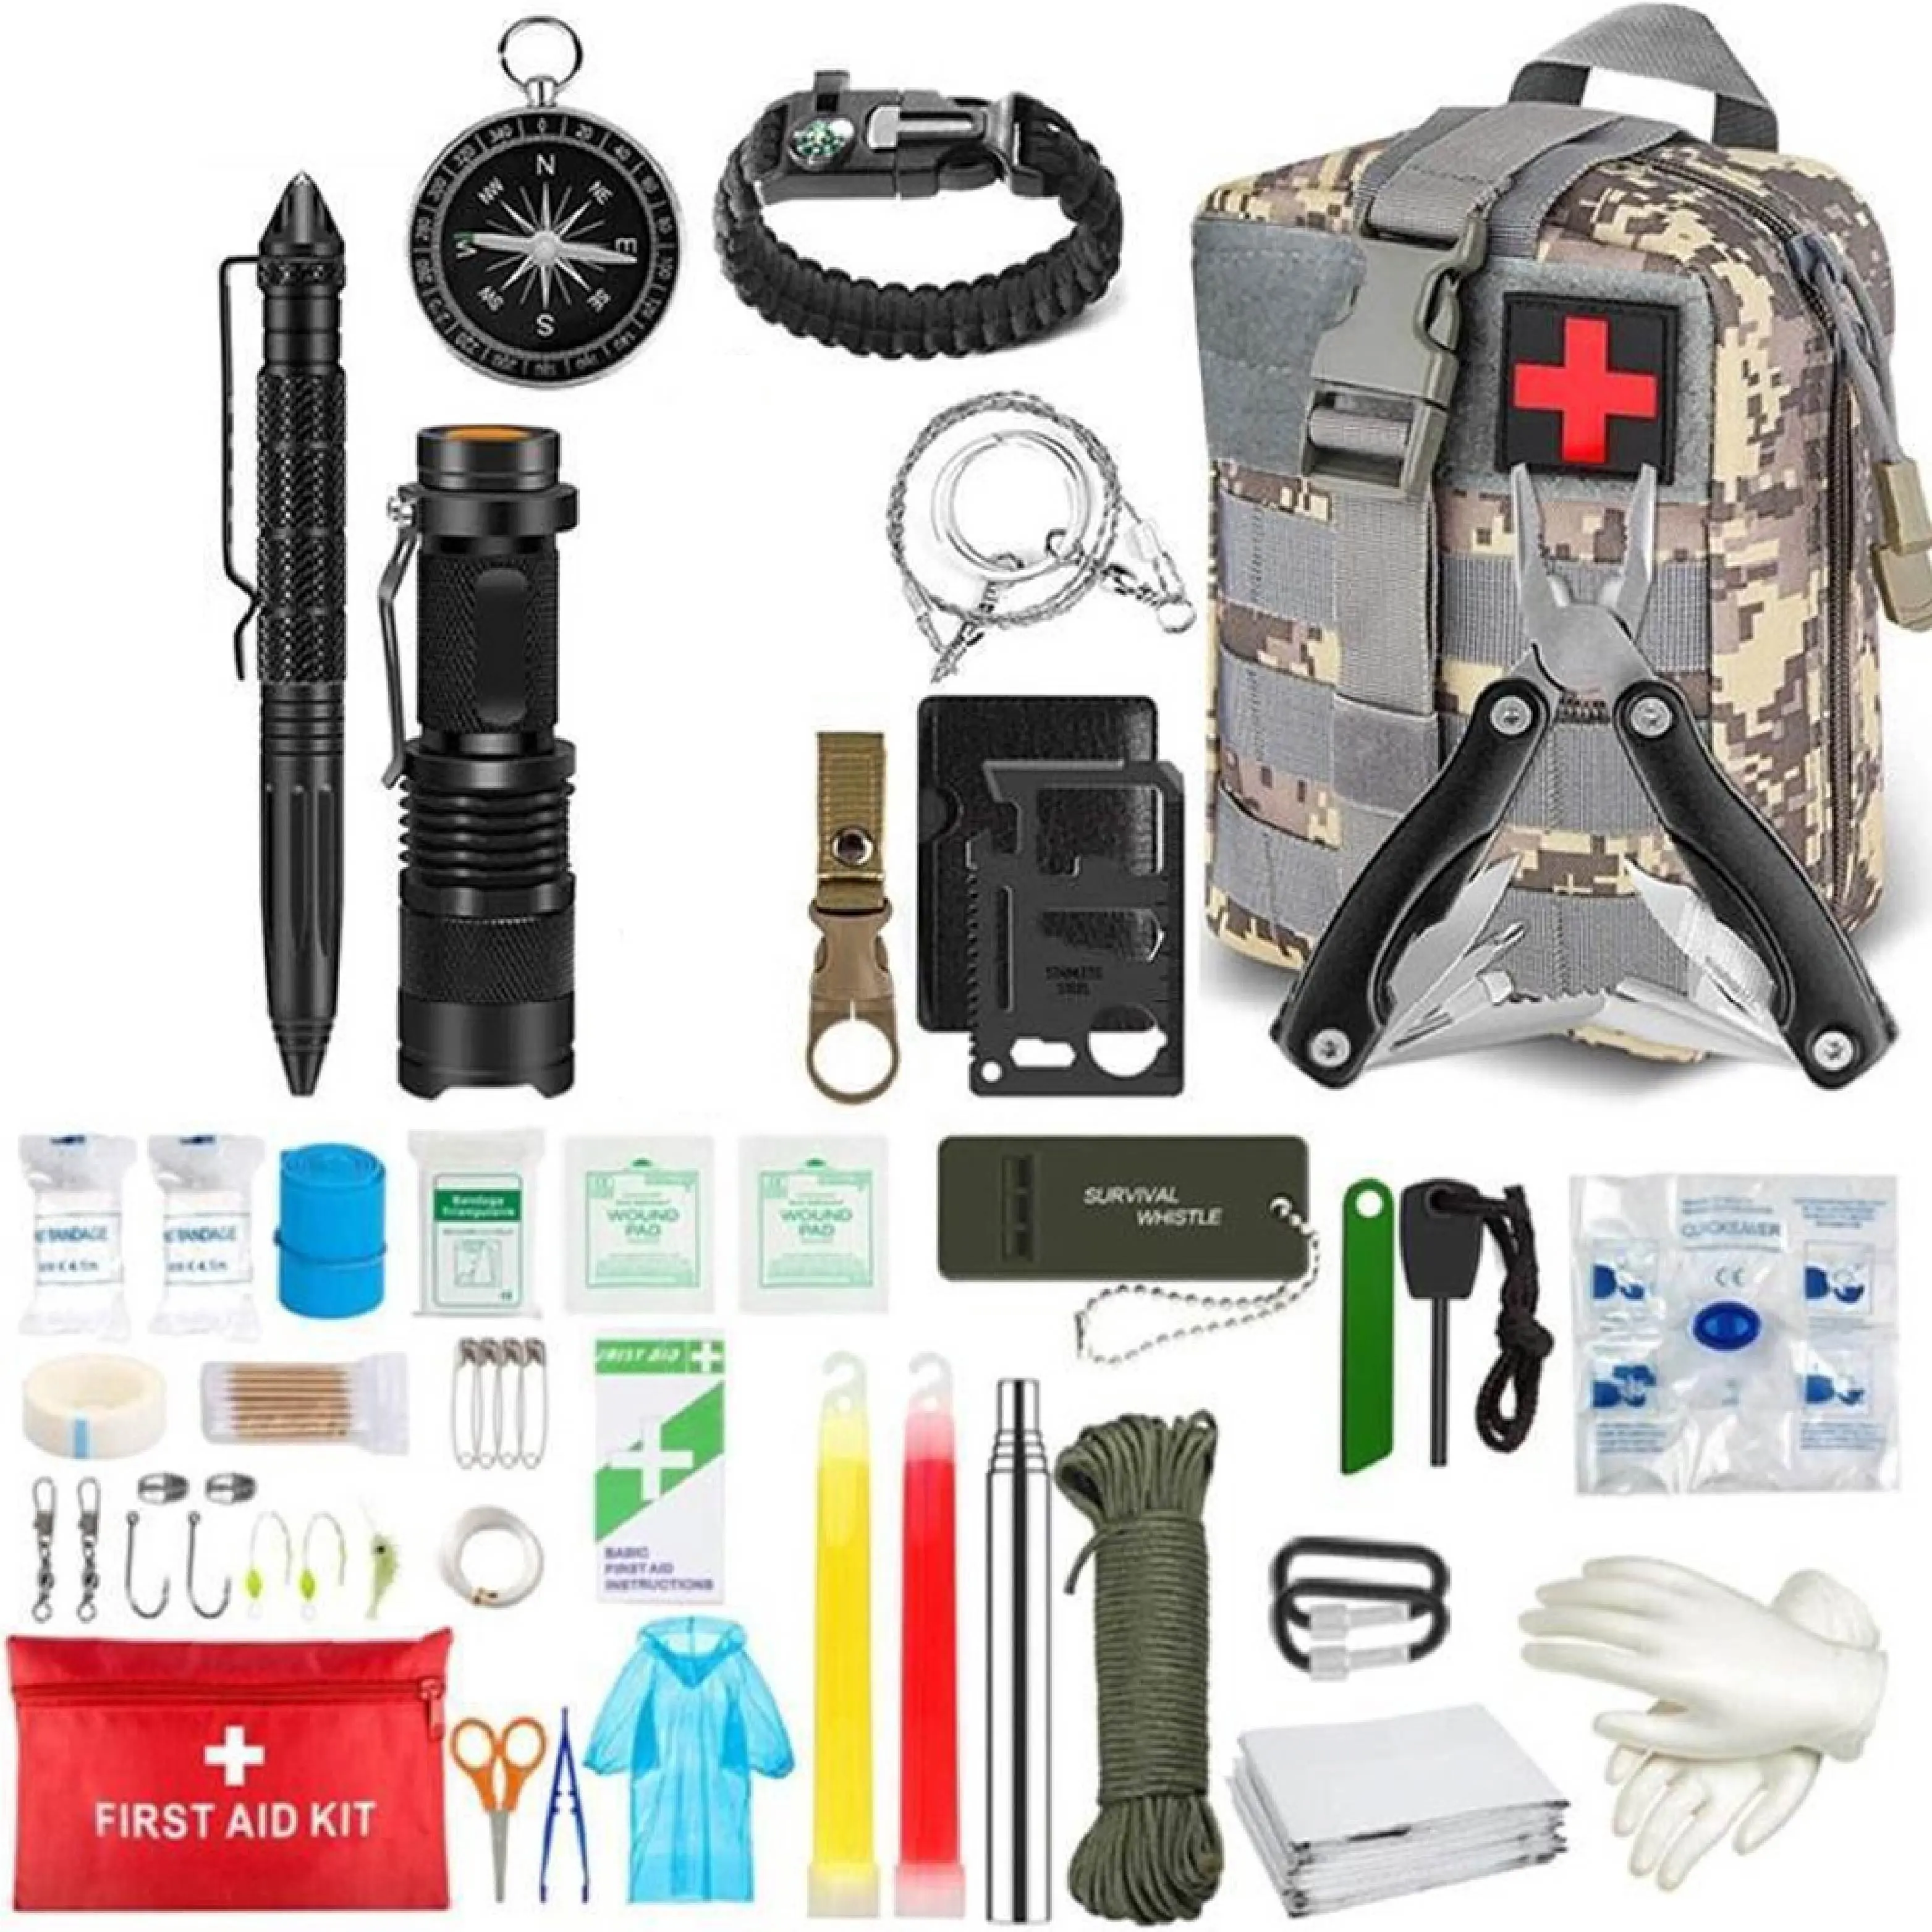 Tactical survival kits